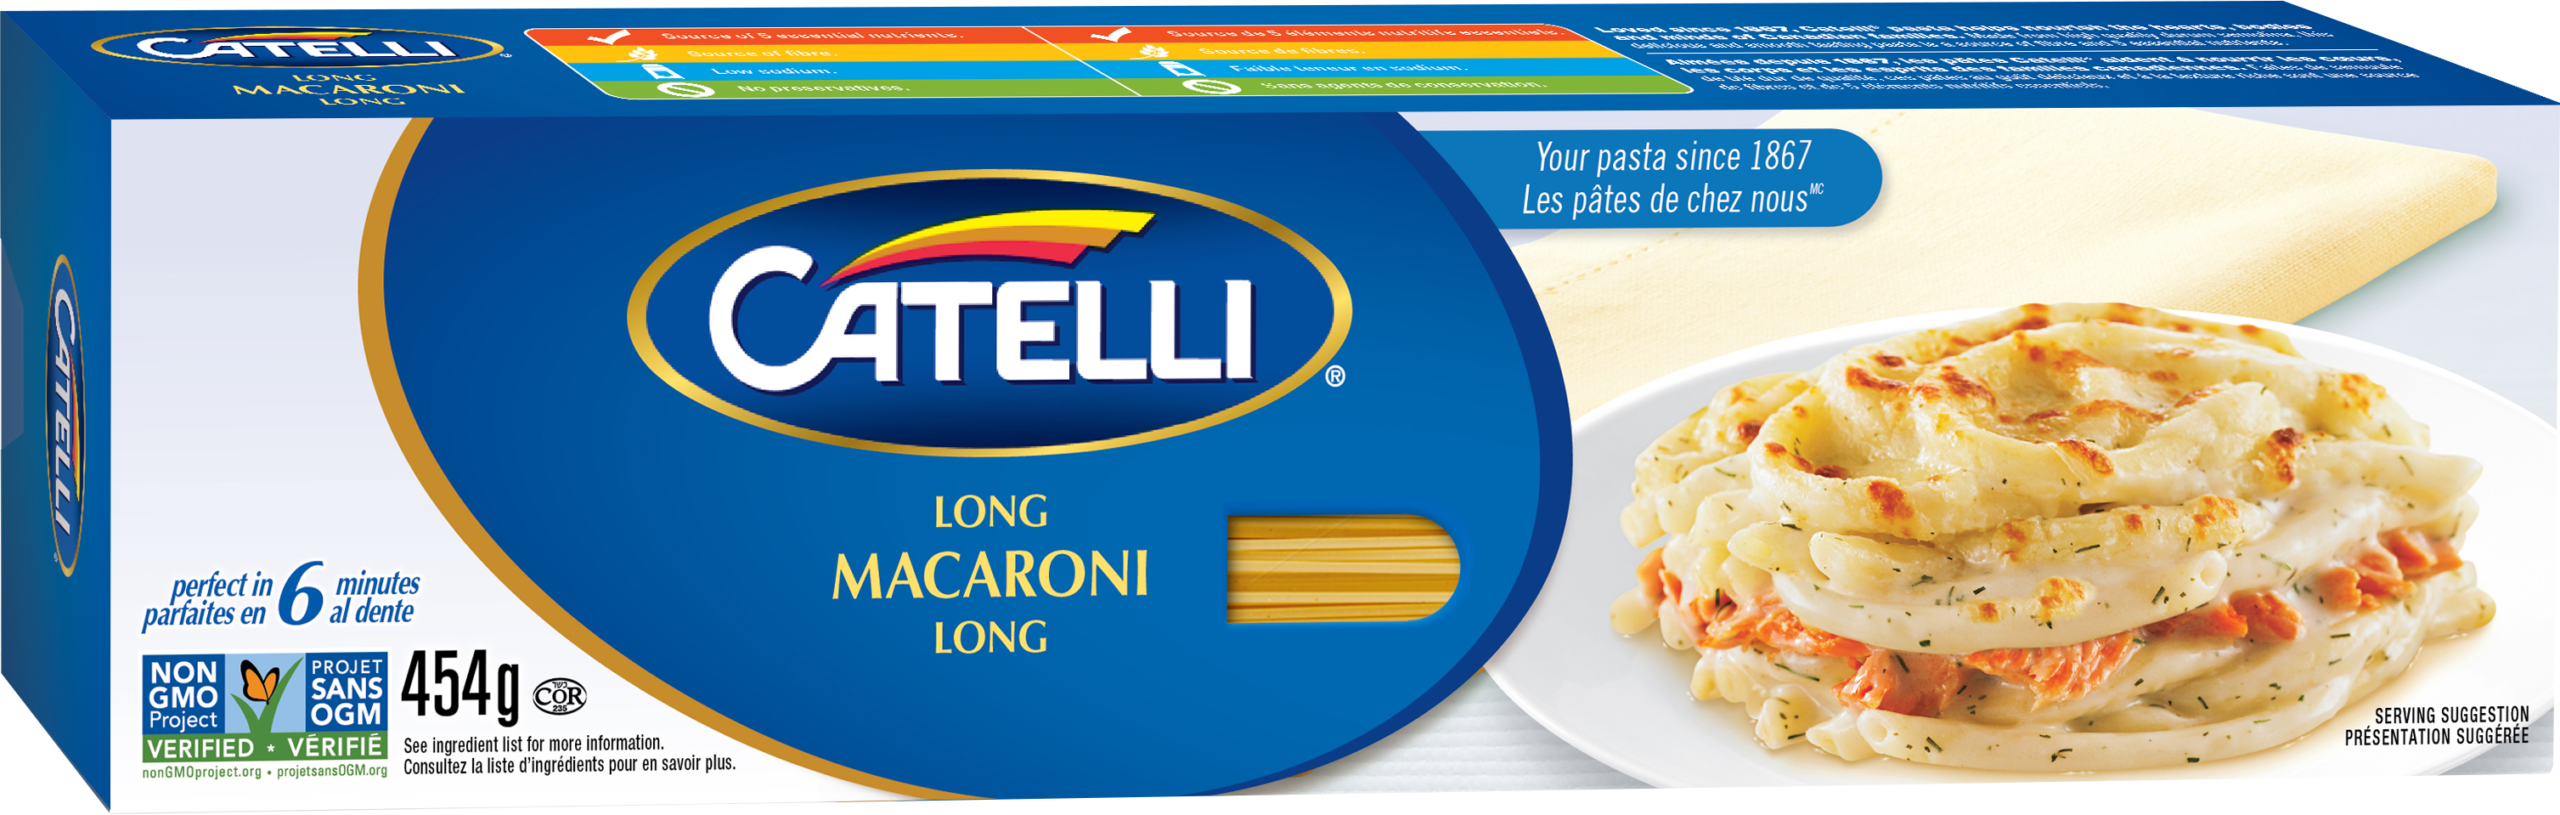 Catelli Classique Macaroni Long